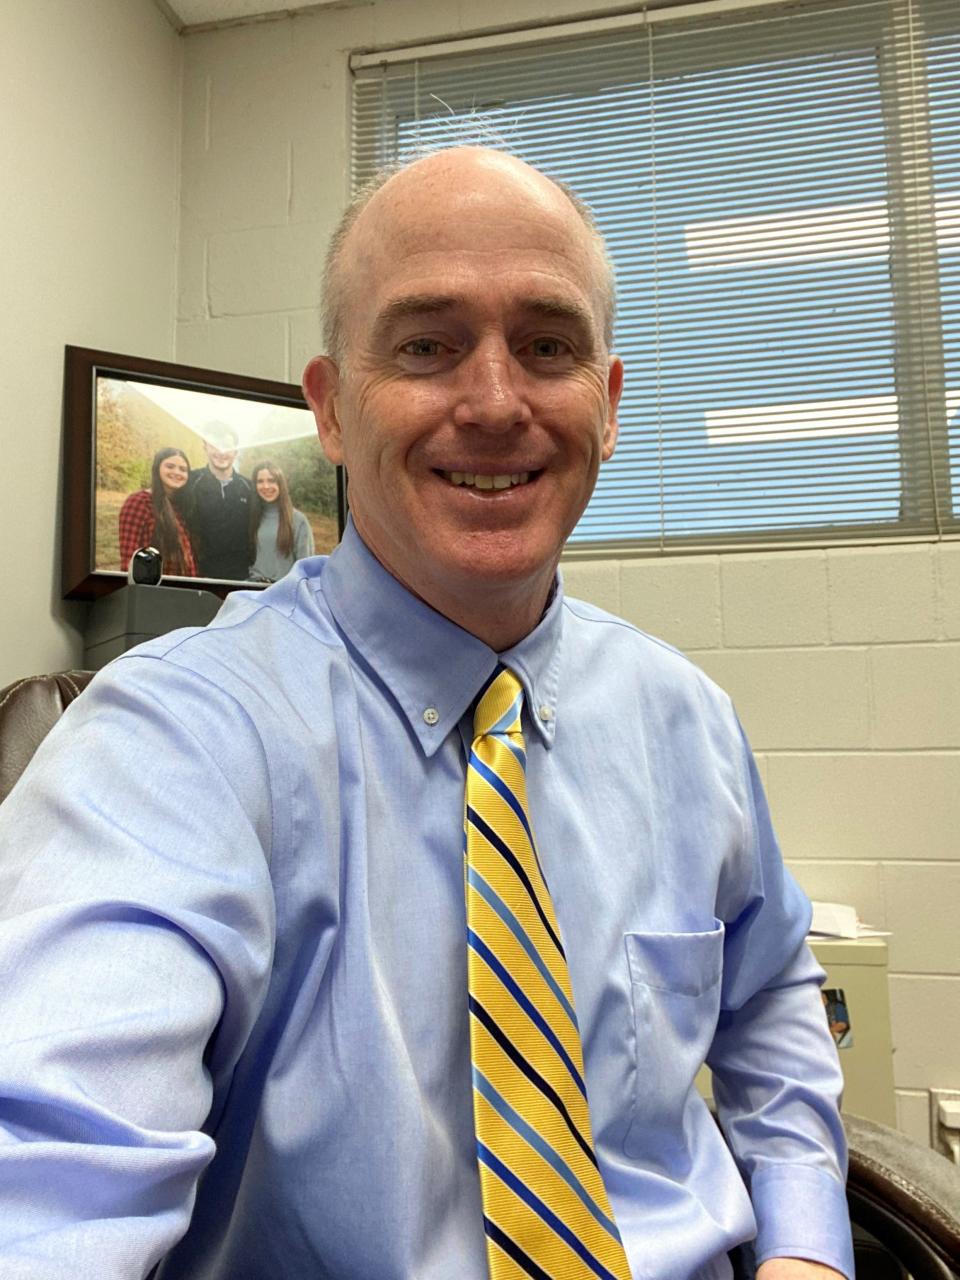 Calvary superintendent Chad McDowell